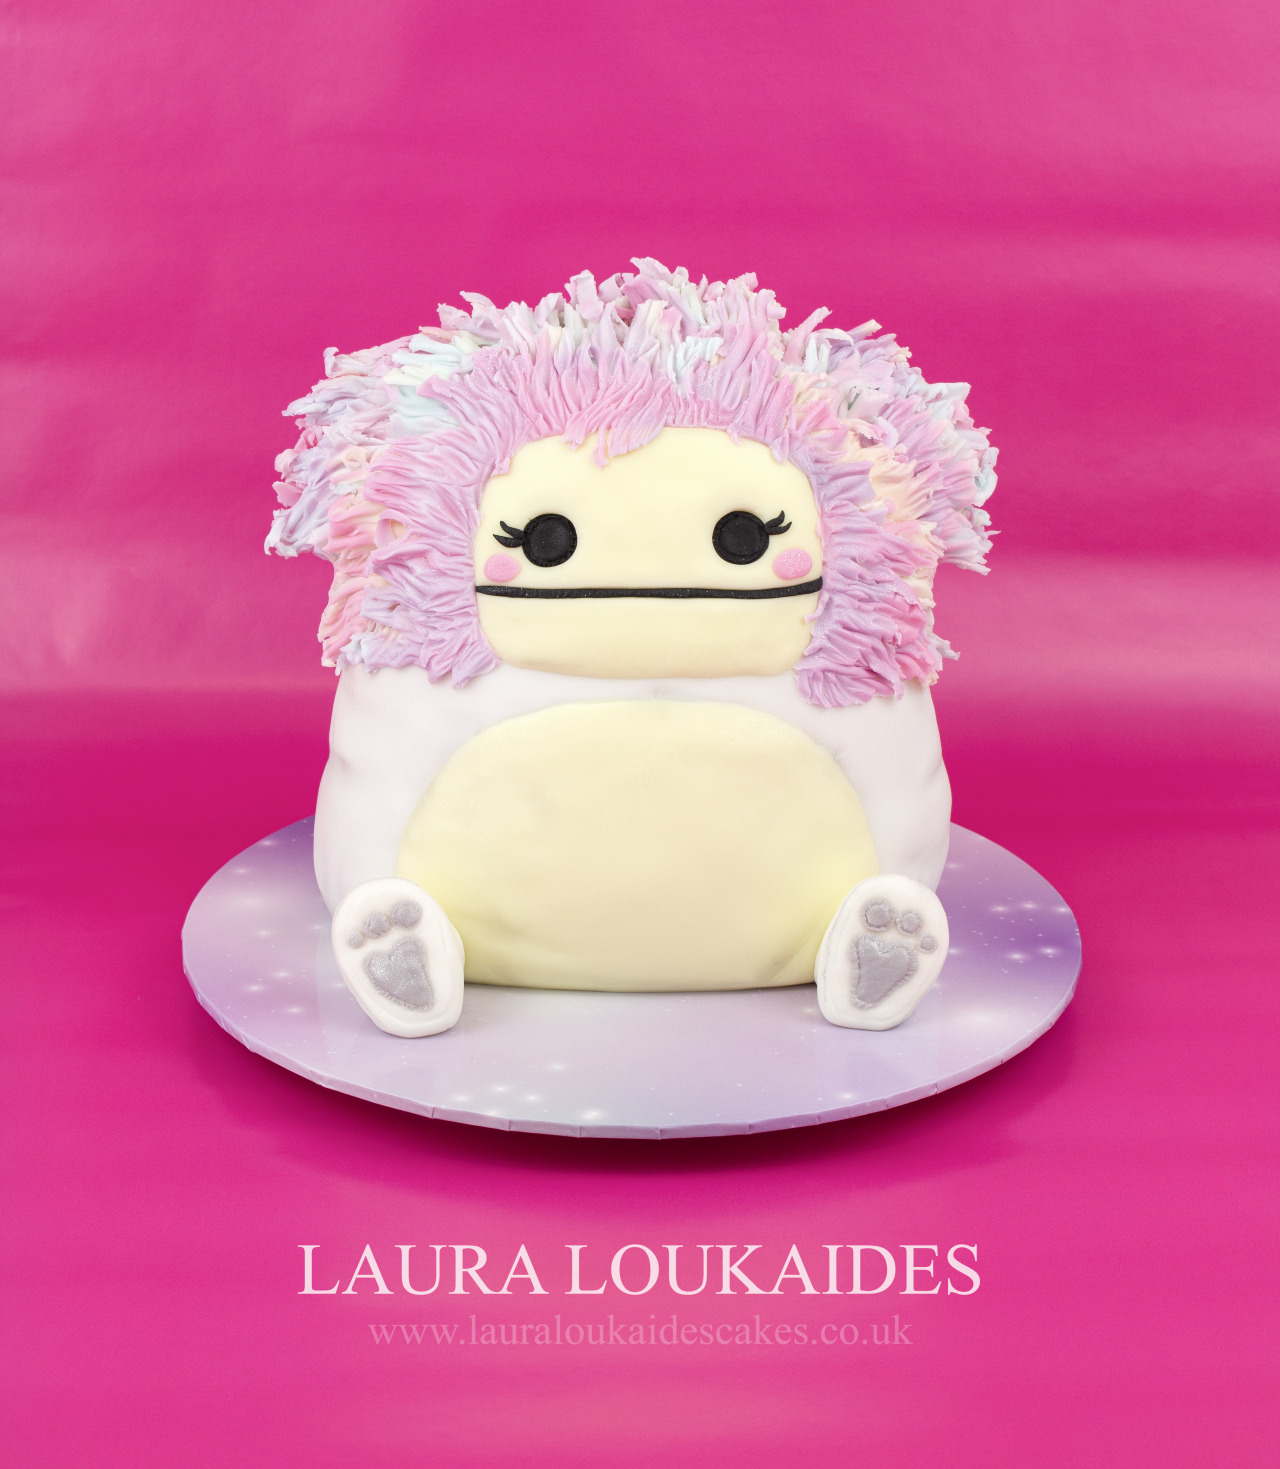 LAURA LOUKAIDES — “Little Pink Bag” cake by Laura Loukaides